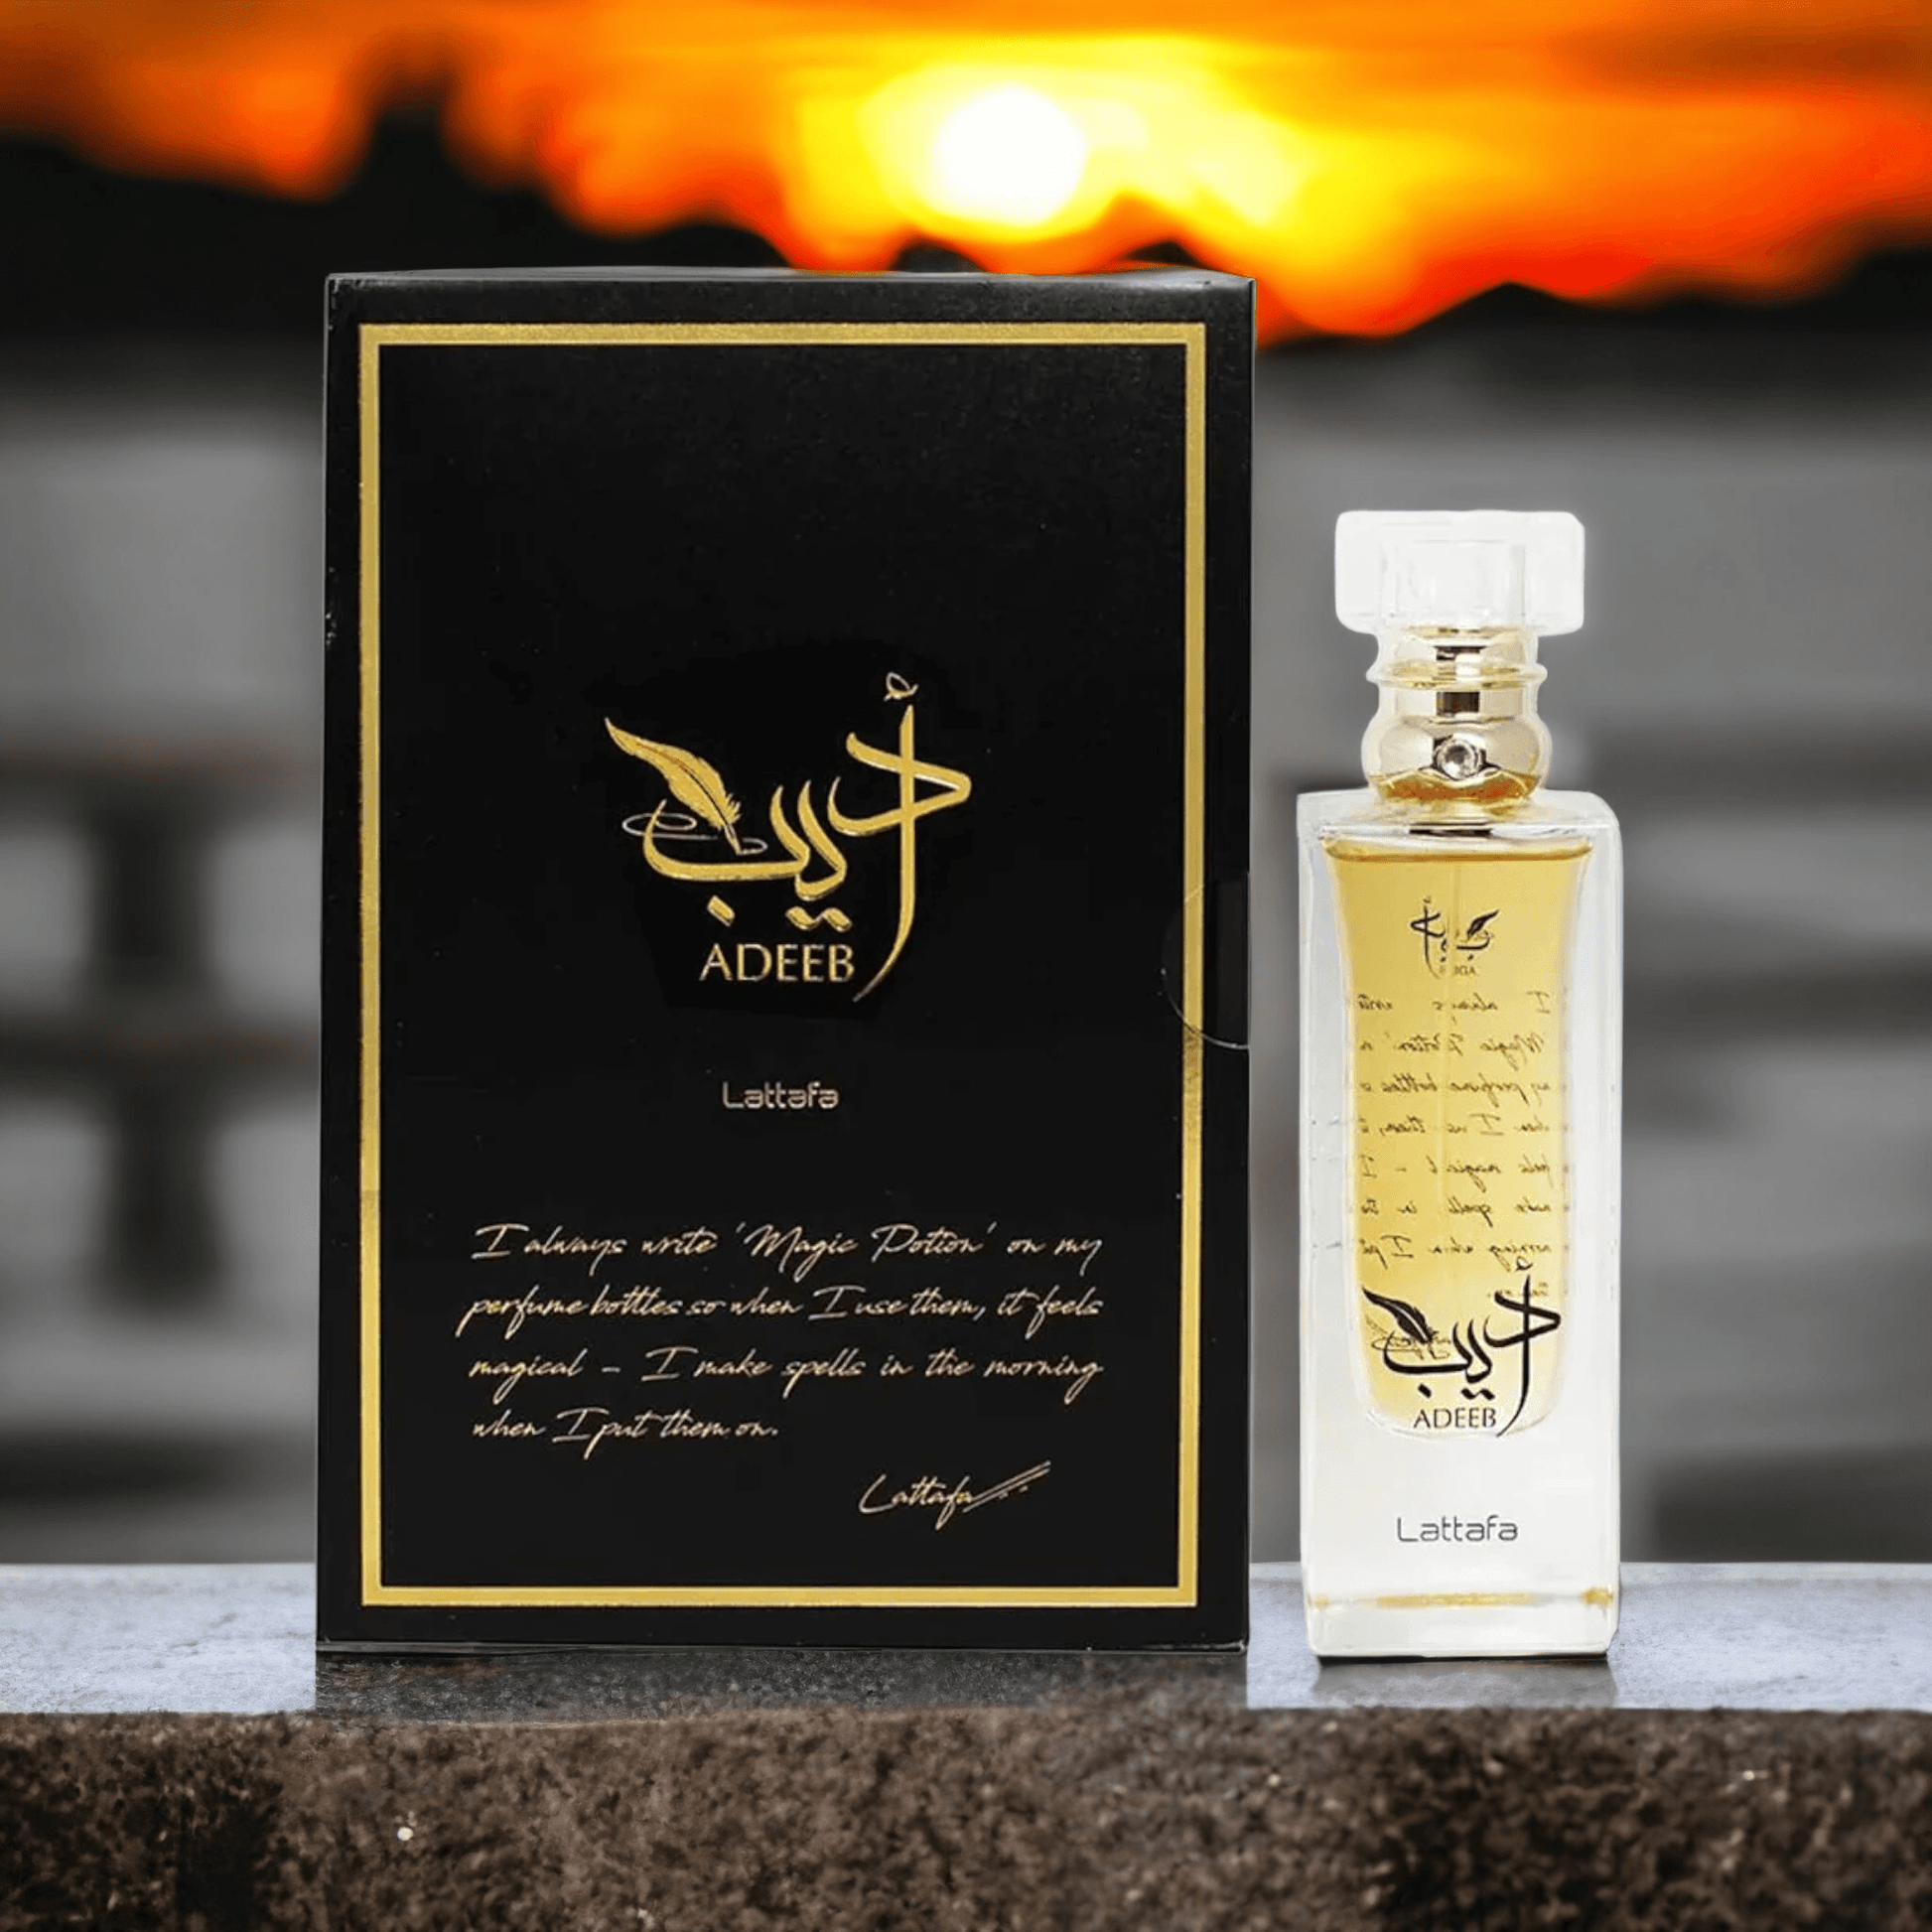 Lattafa | Adeeb - Francent Perfumes